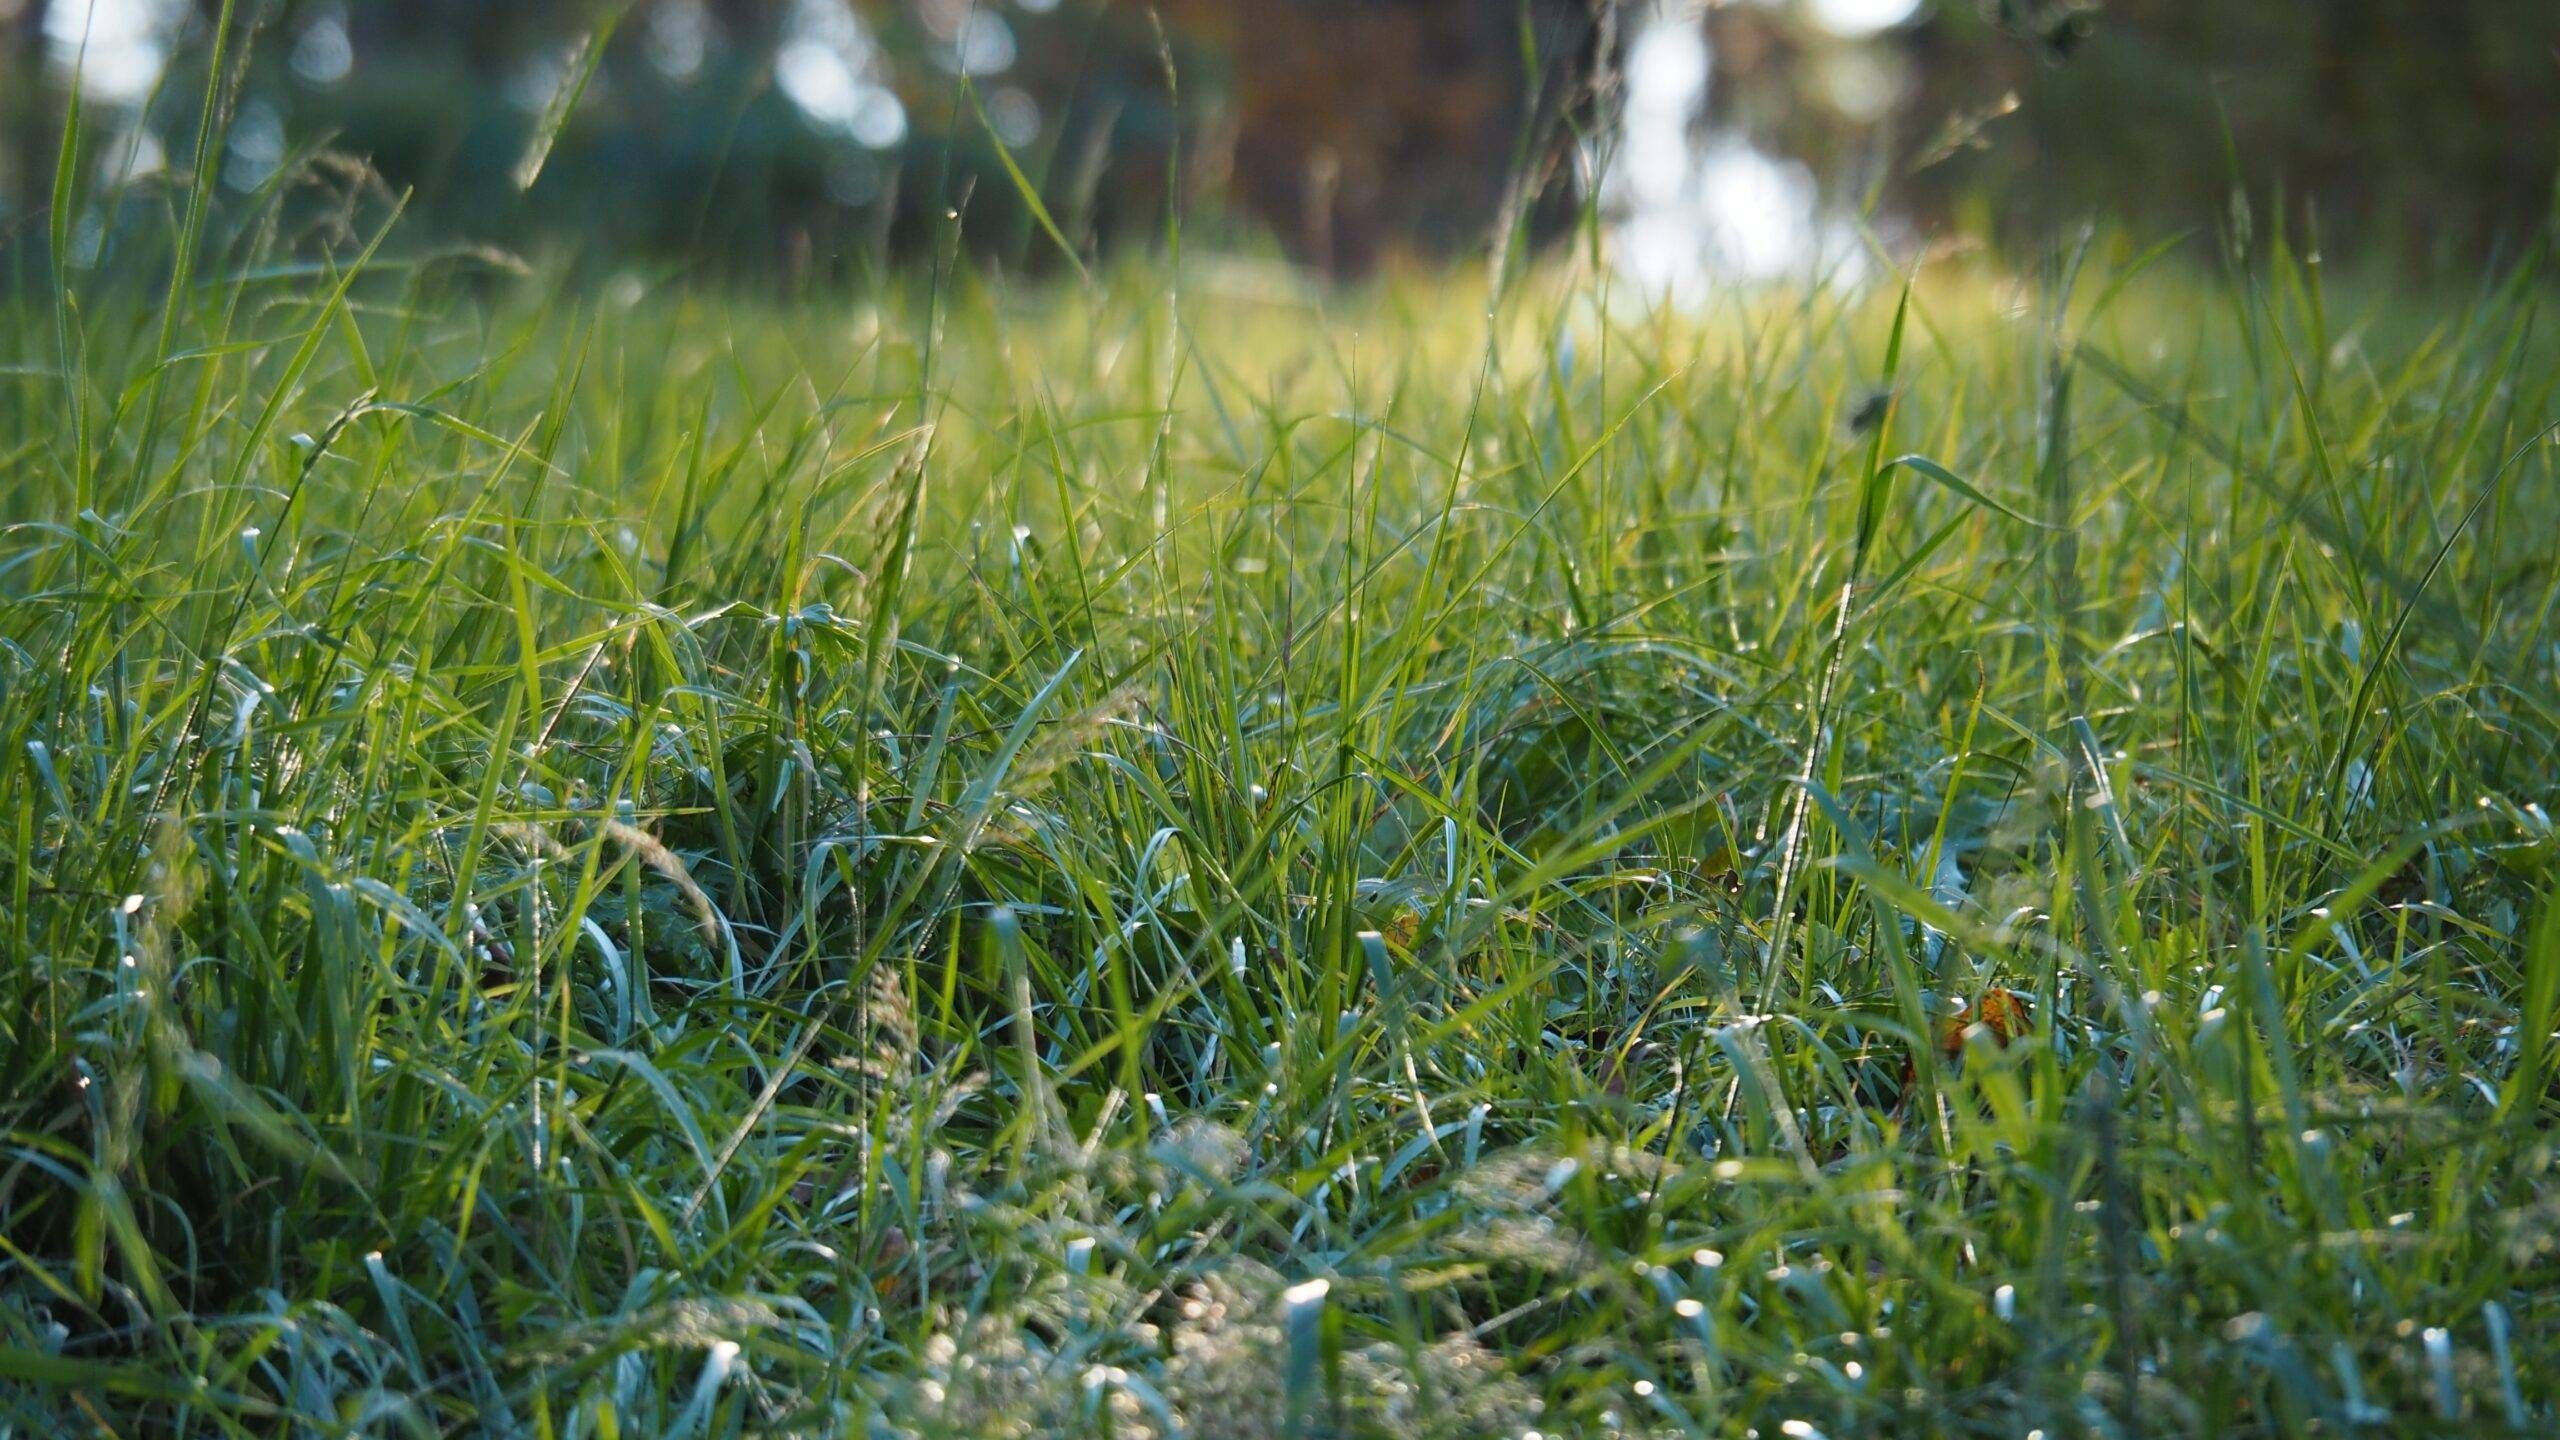 grasses after rains - scents of seasonal rains